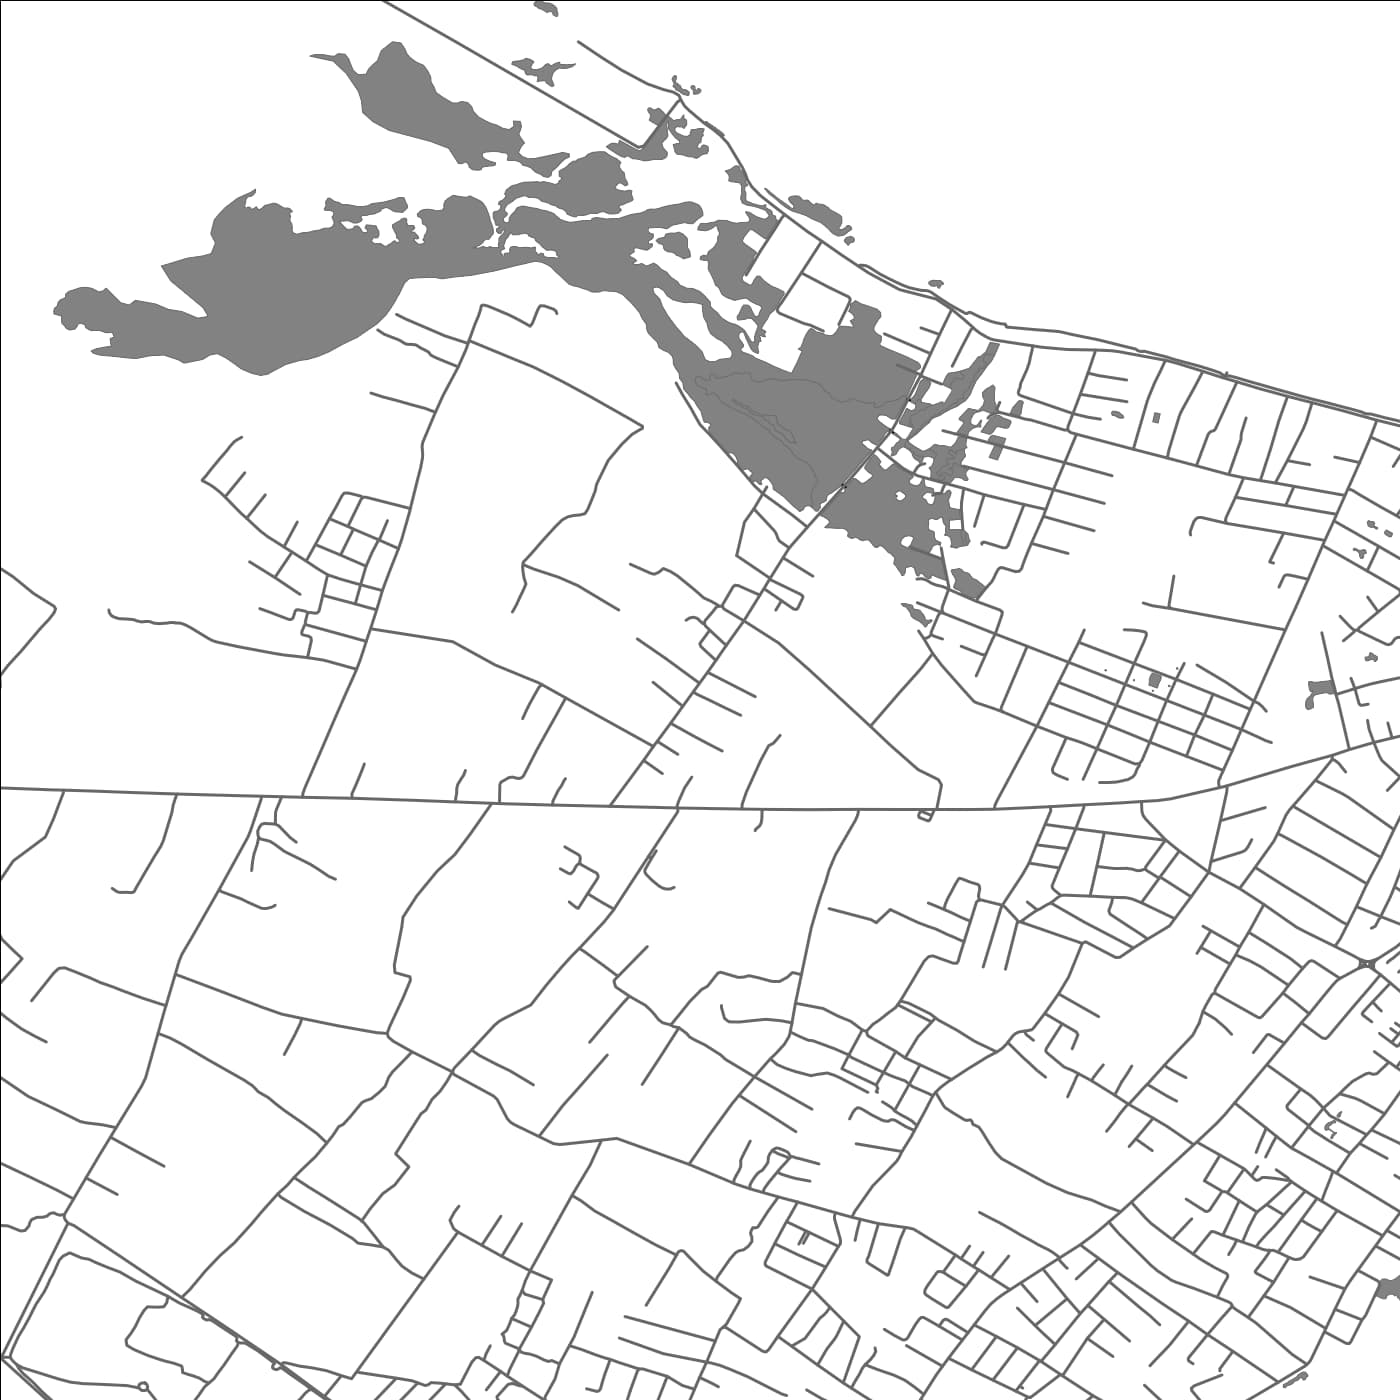 ROAD MAP OF HOFOA, TONGA BY MAPBAKES